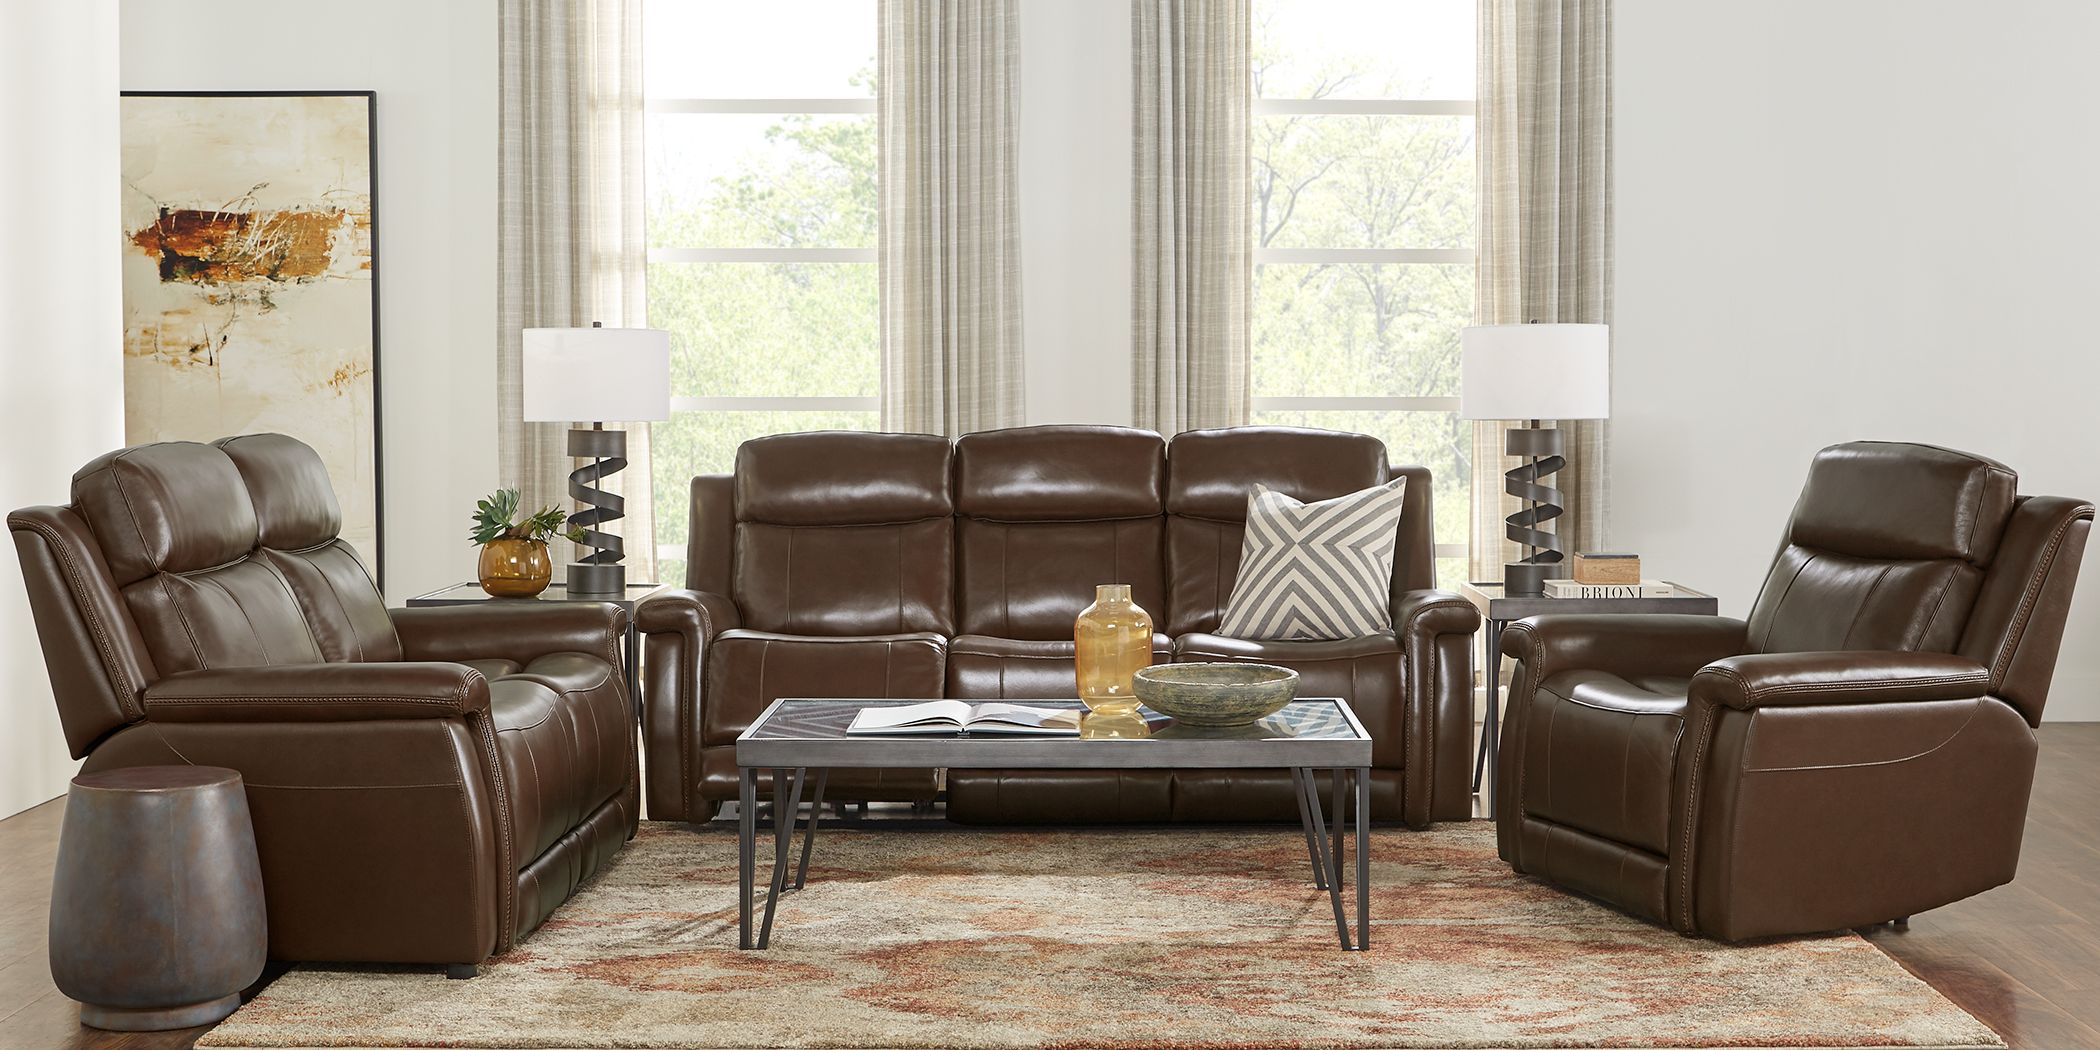 Leather Living Room Sets Furniture, Brown Leather Living Room Sets